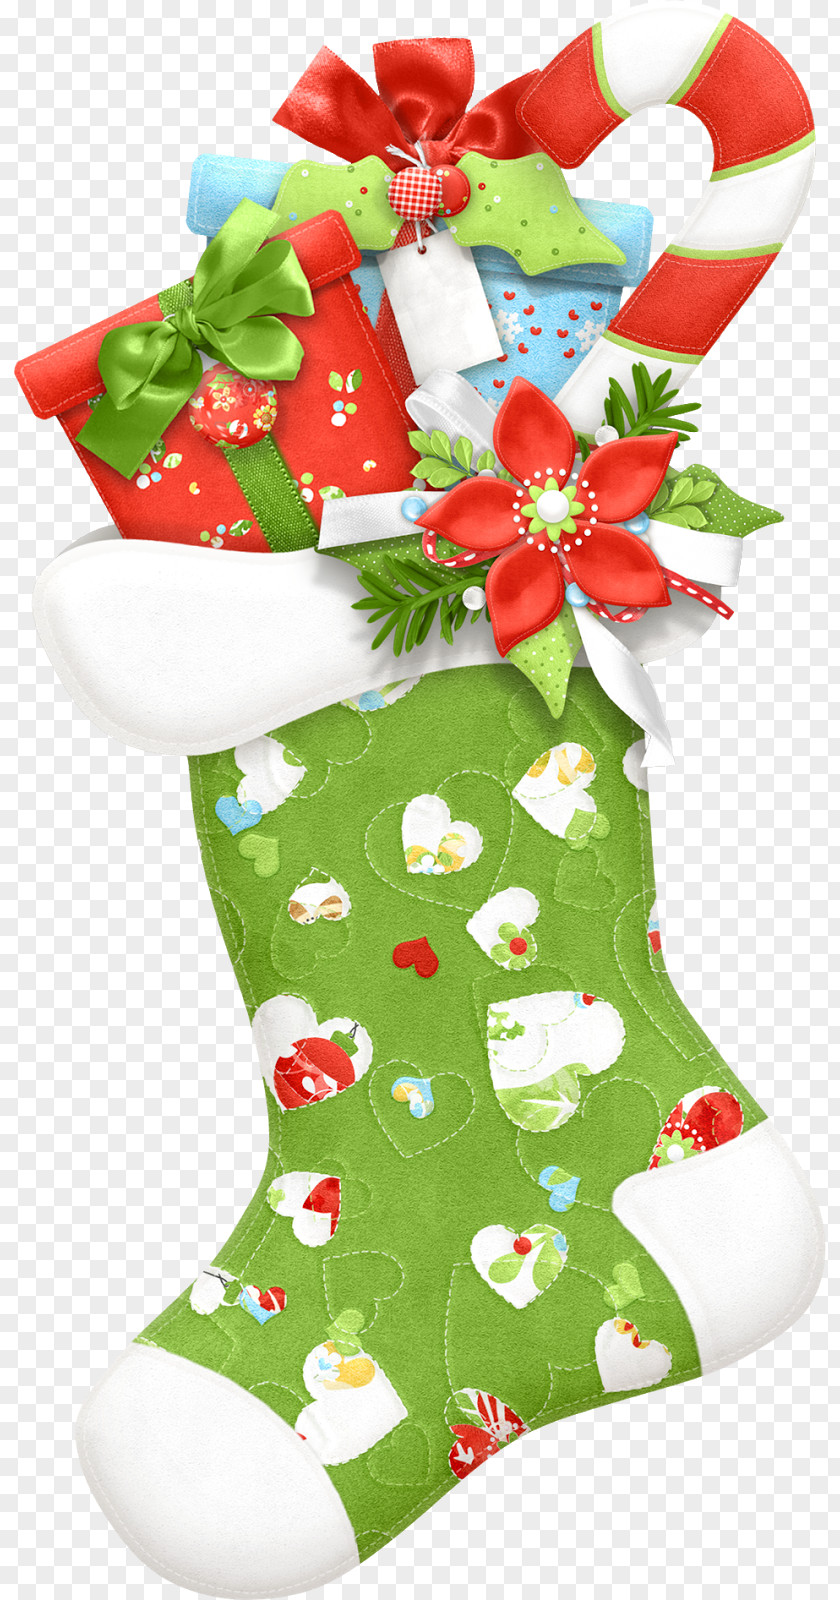 Socks Christmas Stockings Card Clip Art PNG